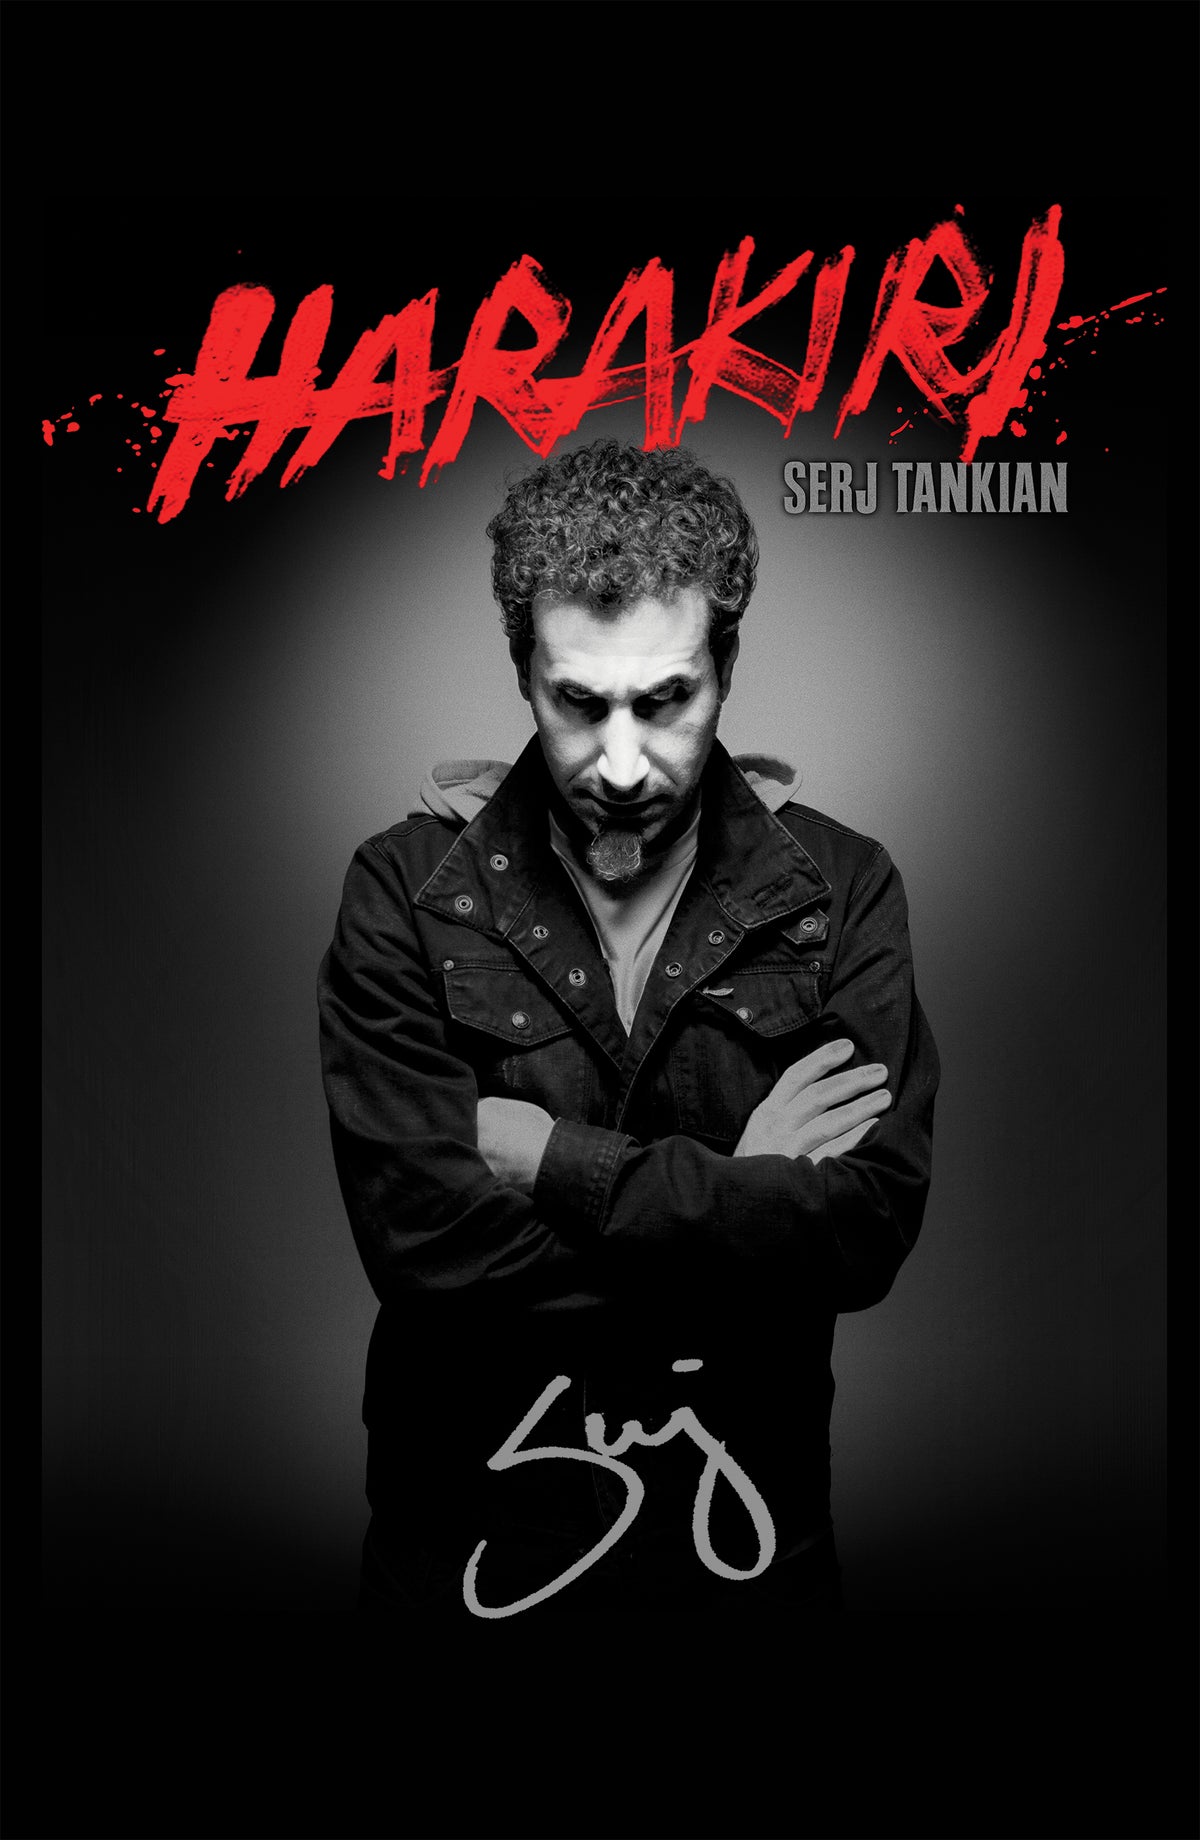 Harakiri Promotional Poster - Autographed